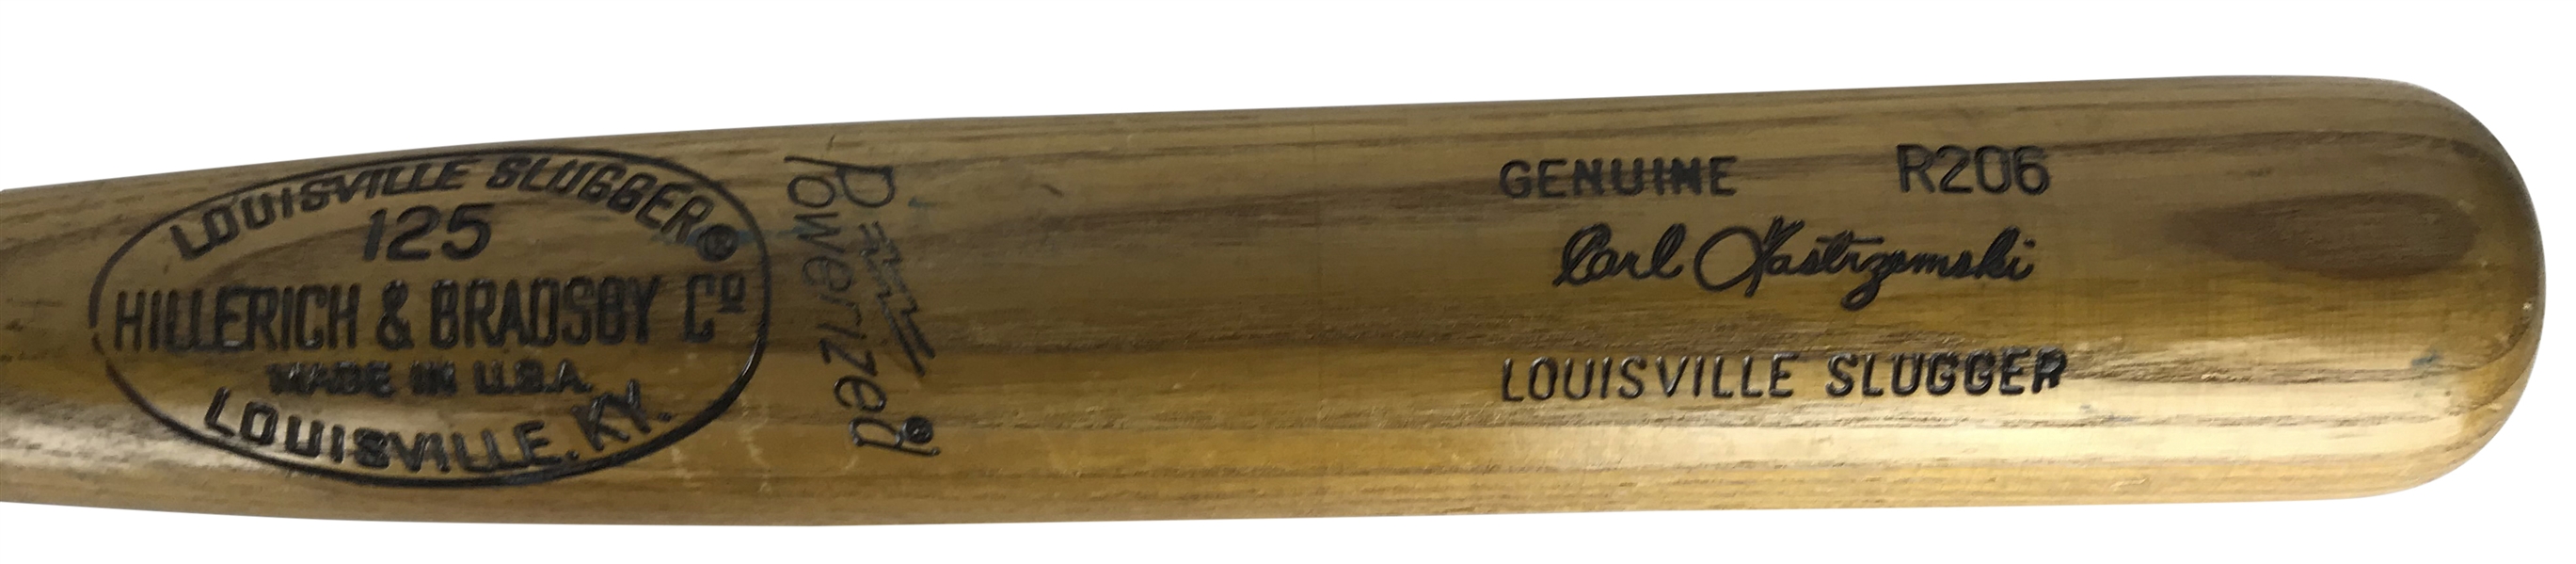 Carl Yastrzemski Game Used 1978-79 Baseball Bat - PSA/DNA GU 8.5!